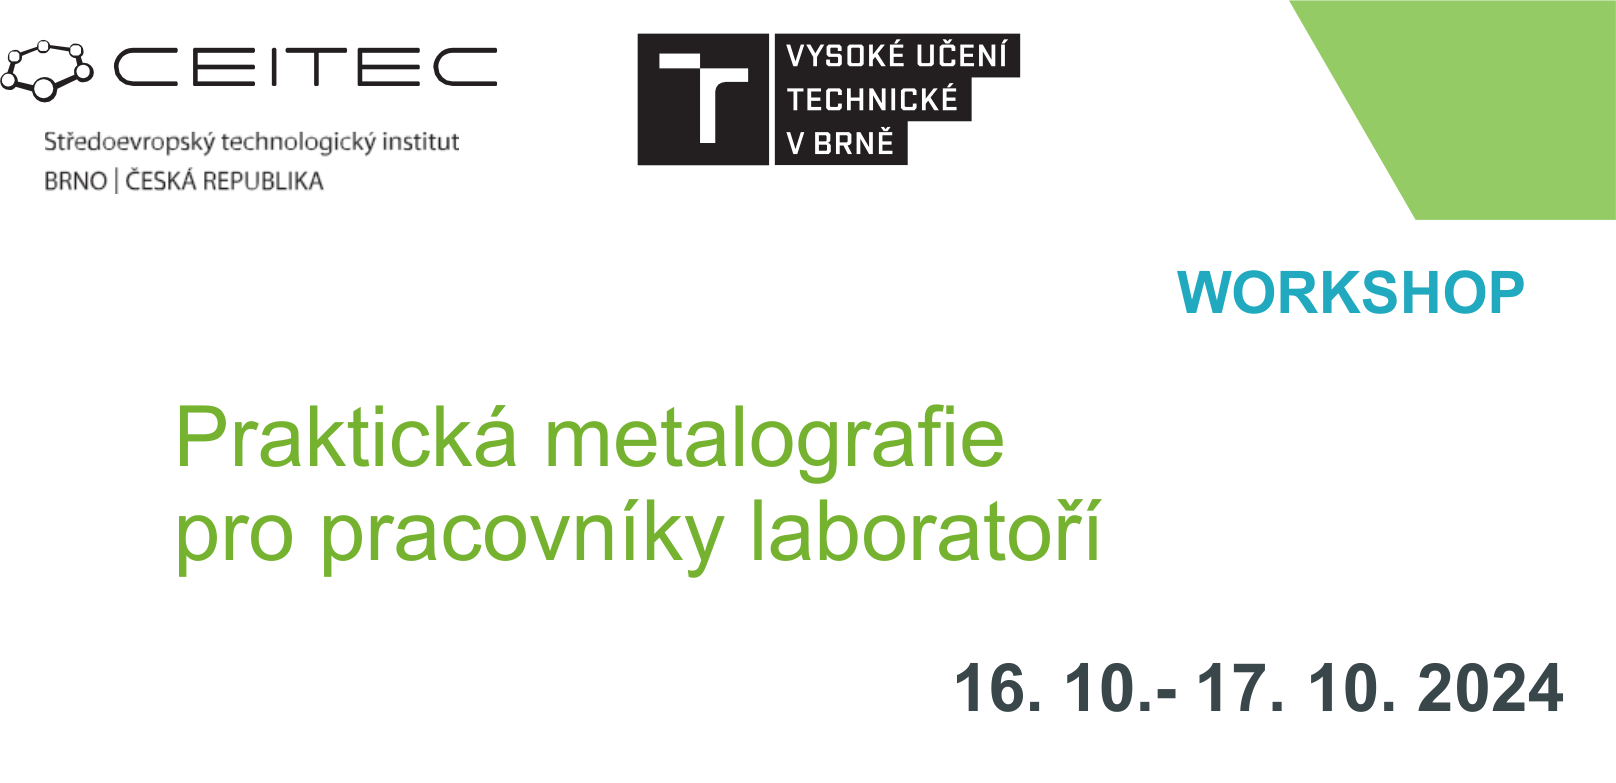 16.- 17. 10. 2024 Praktická metalografie pro pracovníky laboratoří, CEITEC Brno